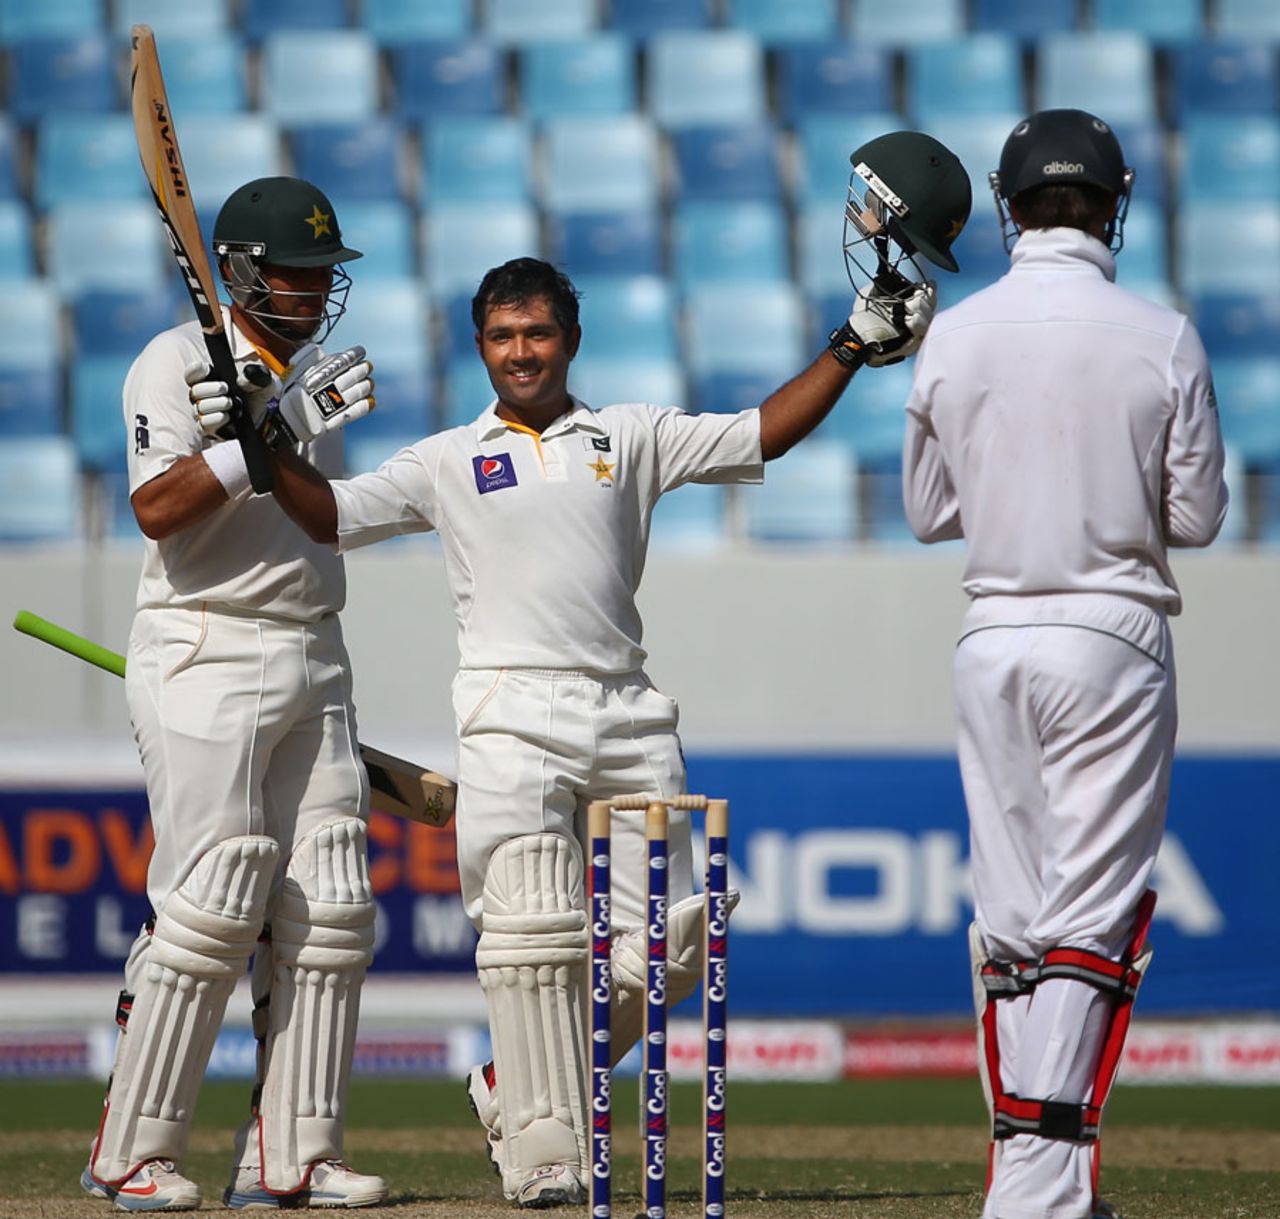 Asad Shafiq raises his bat after reaching his century, Pakistan v South Africa, 2nd Test, Dubai, 4th day, October 26, 2013